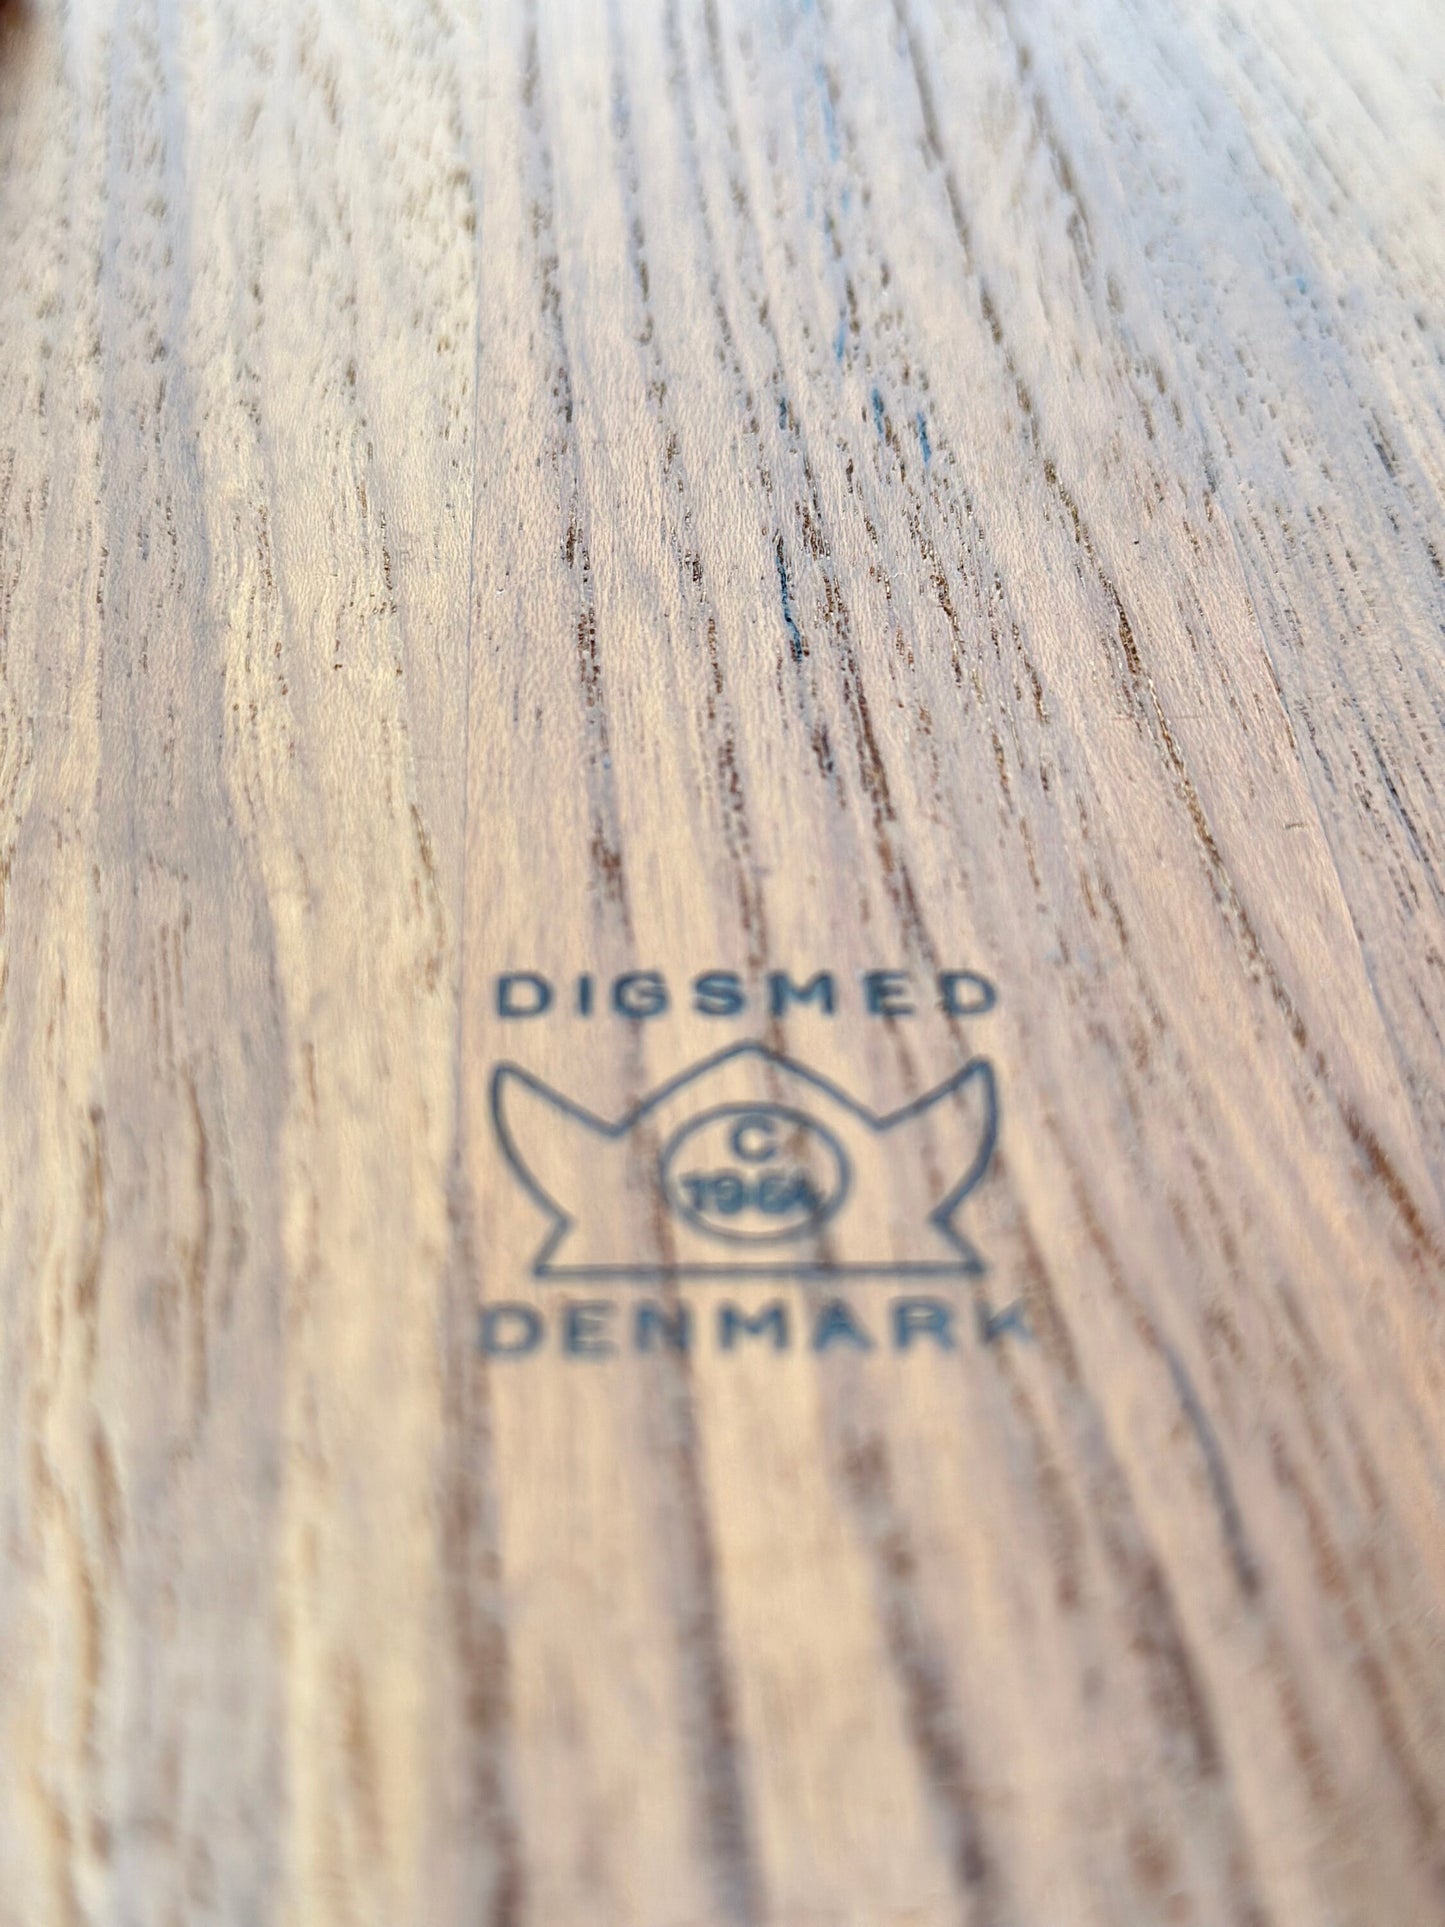 Midcentury Digsmed Denmark Teak Tray from 1960s Vintage